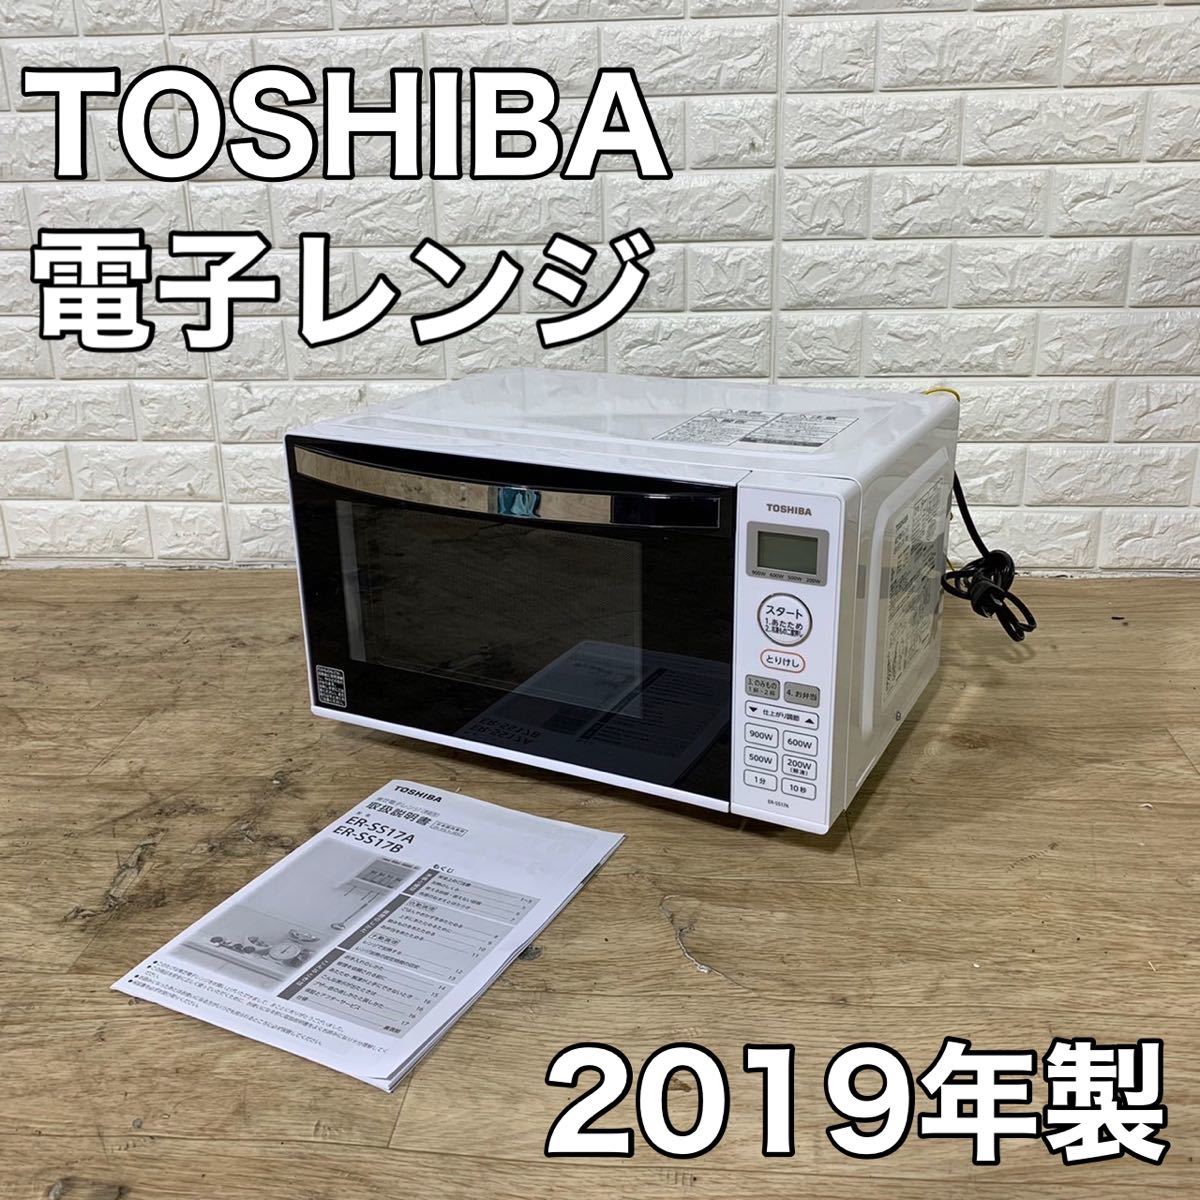 TOSHIBA 東芝 電子レンジ ER-SS17A(W) 2019年製 J501